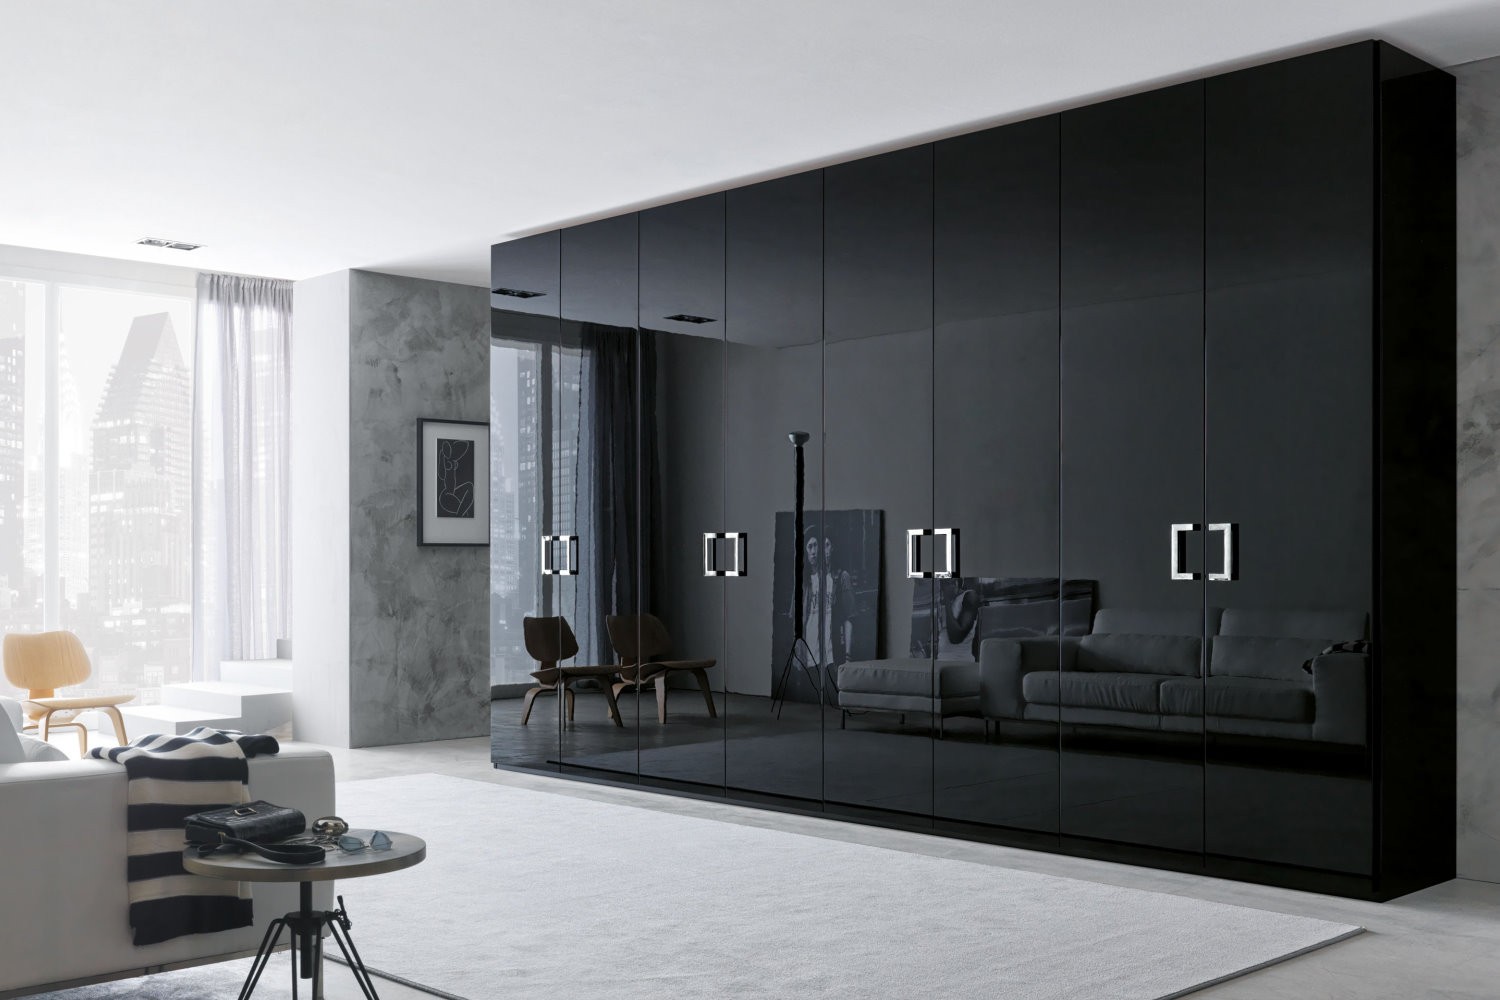 Latest-Stylish-Wardrobe-Design-2015-with-Modern-Black-Shine-Wardrobe-Design-Grey-Carpet-and-Minimalist-Table